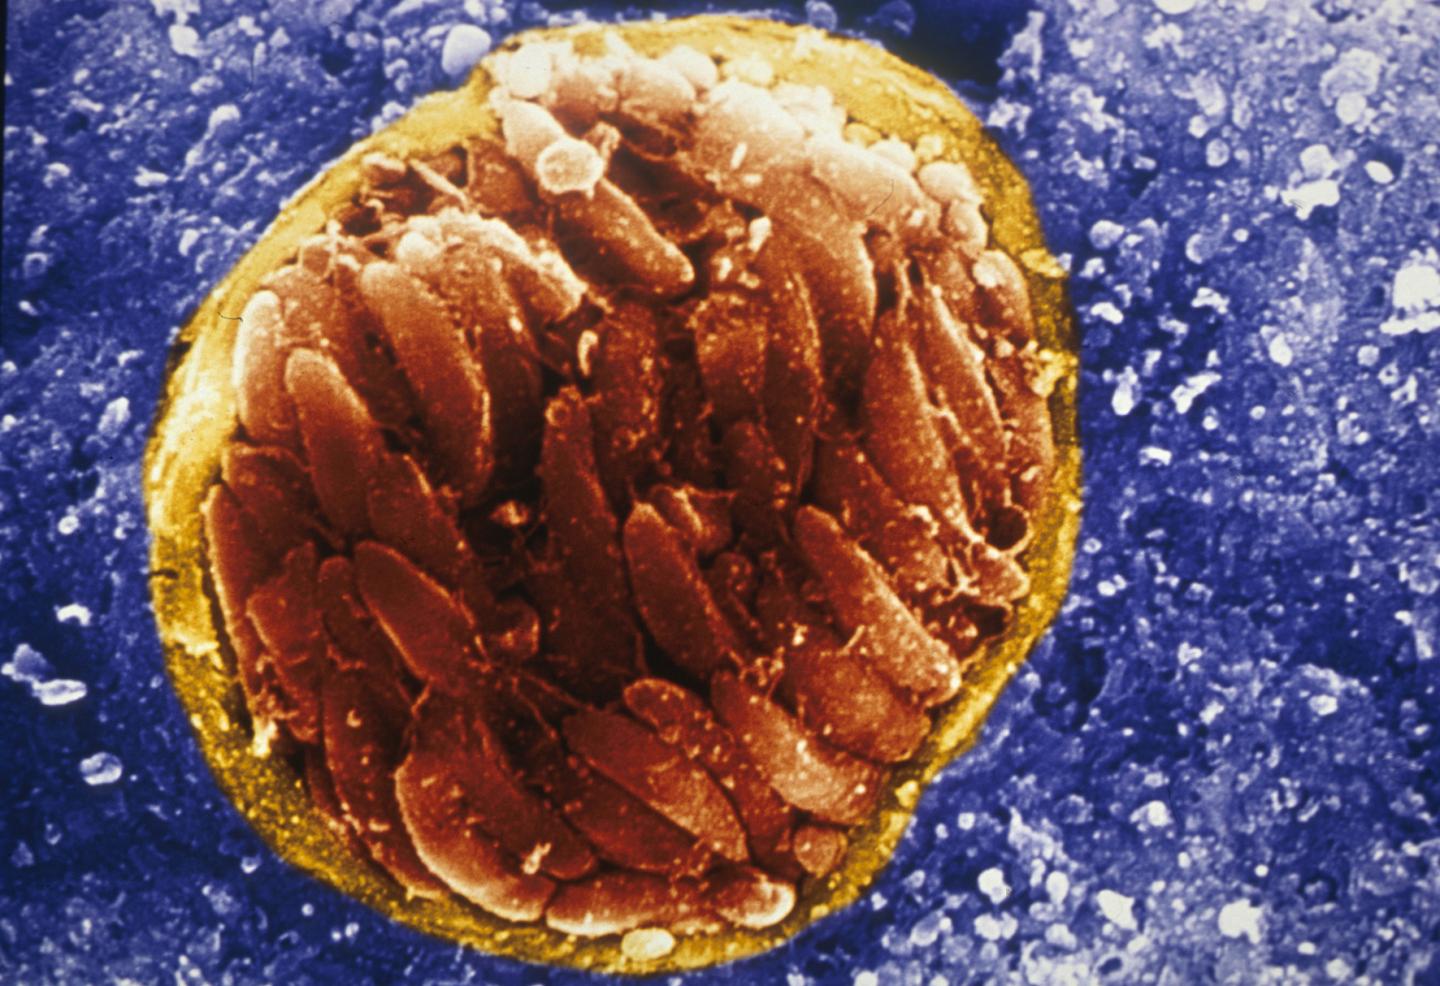 Toxoplasma gondii Tissue Cyst